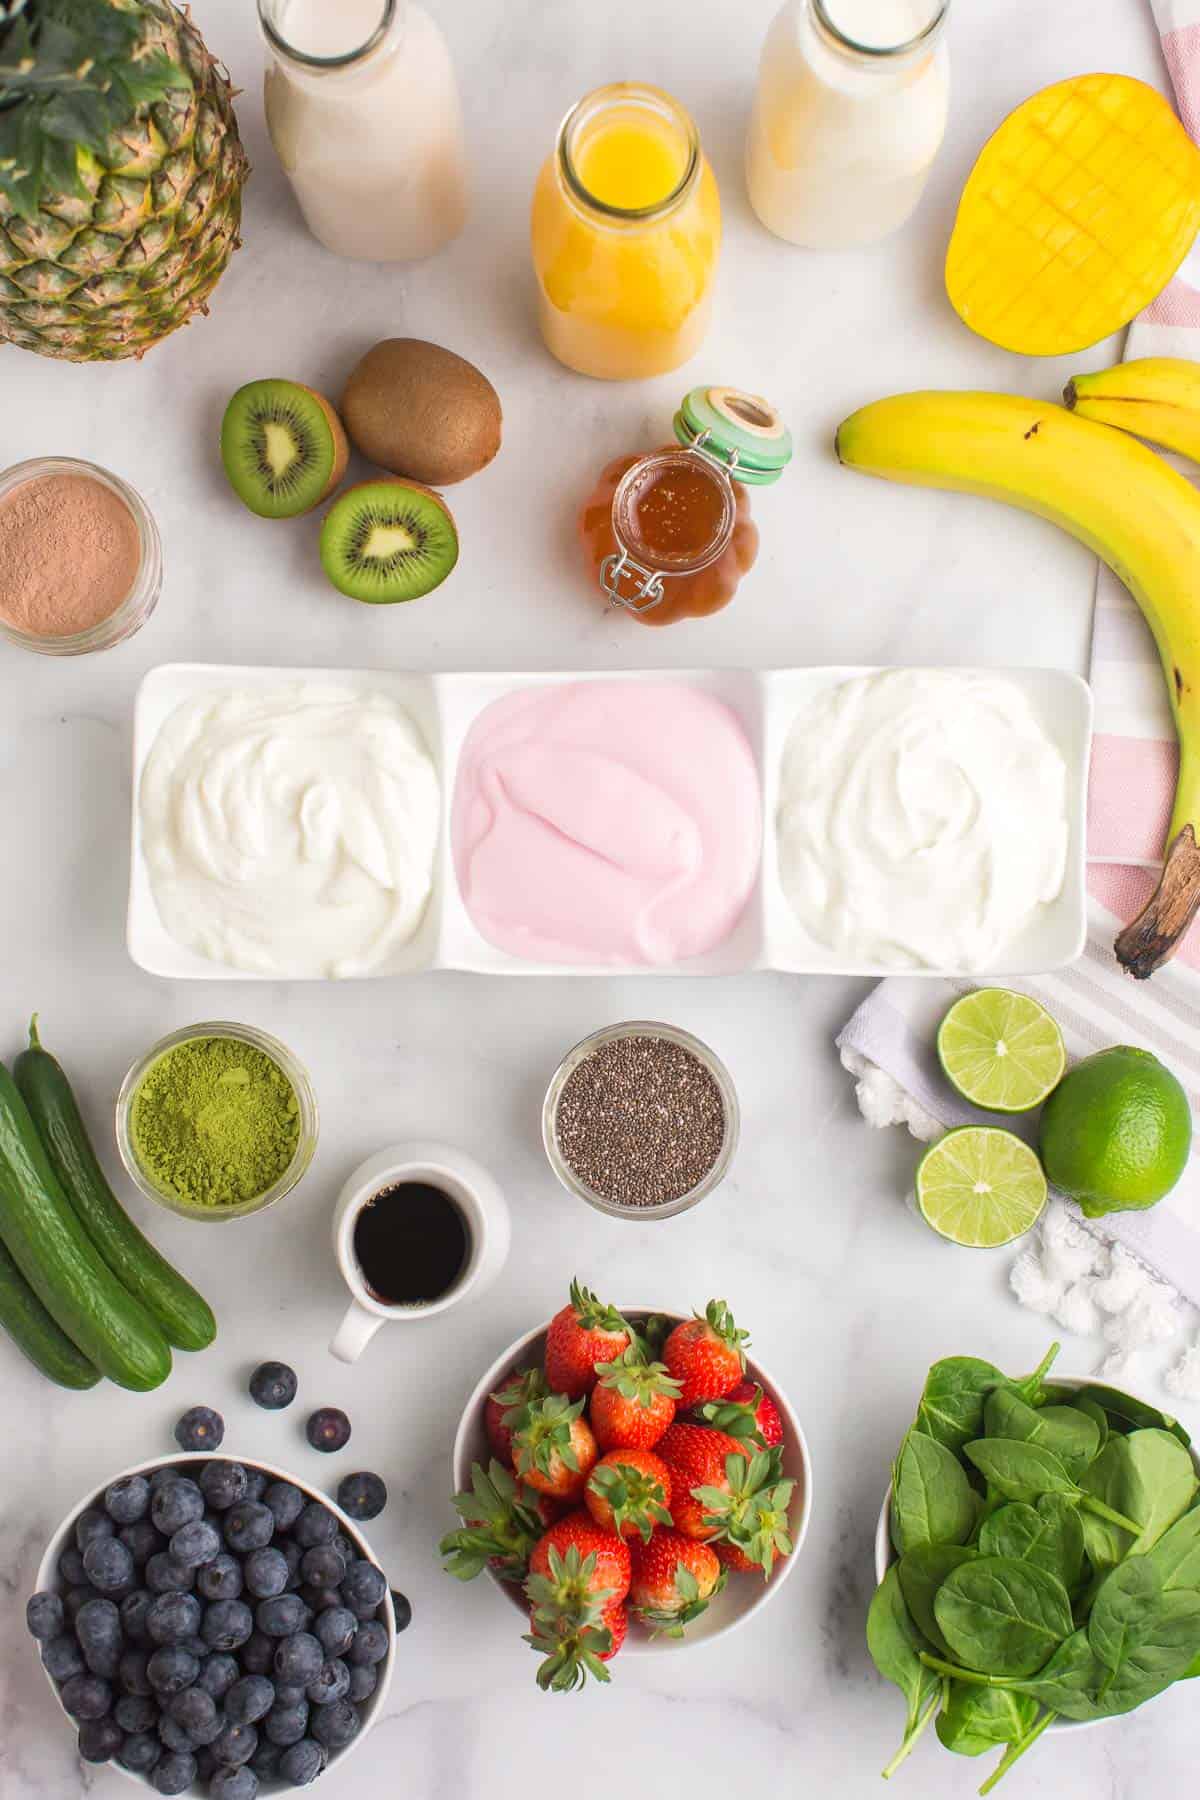 Overhead view of smoothie ingredients including yogurt, fruit, vegetables, and sweeteners.